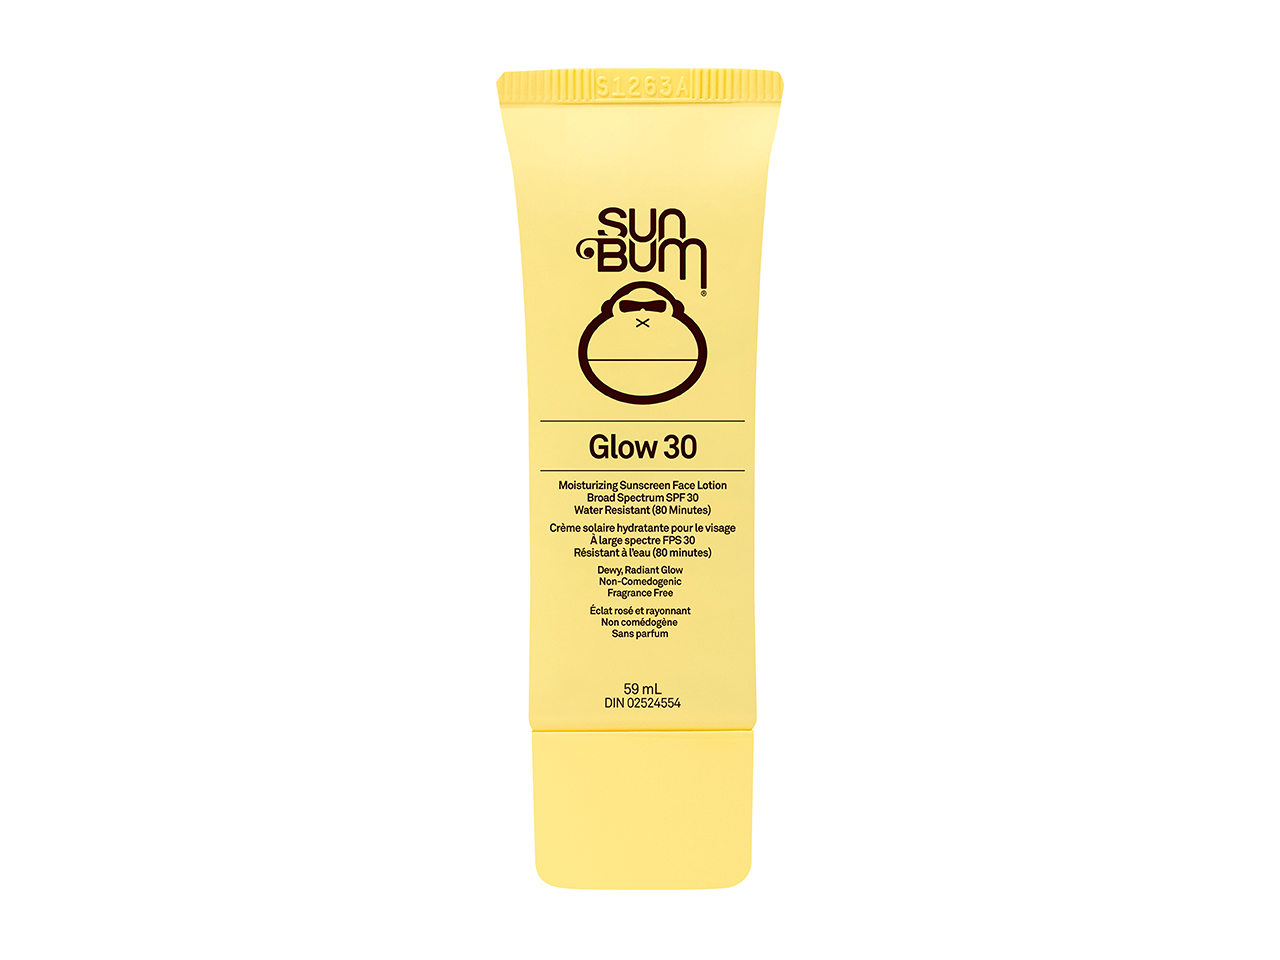 A yellow squeeze tube of Sun Bum Glow 30 Moisturizing Sunscreen Face Lotion SPF 30 sunscreen.